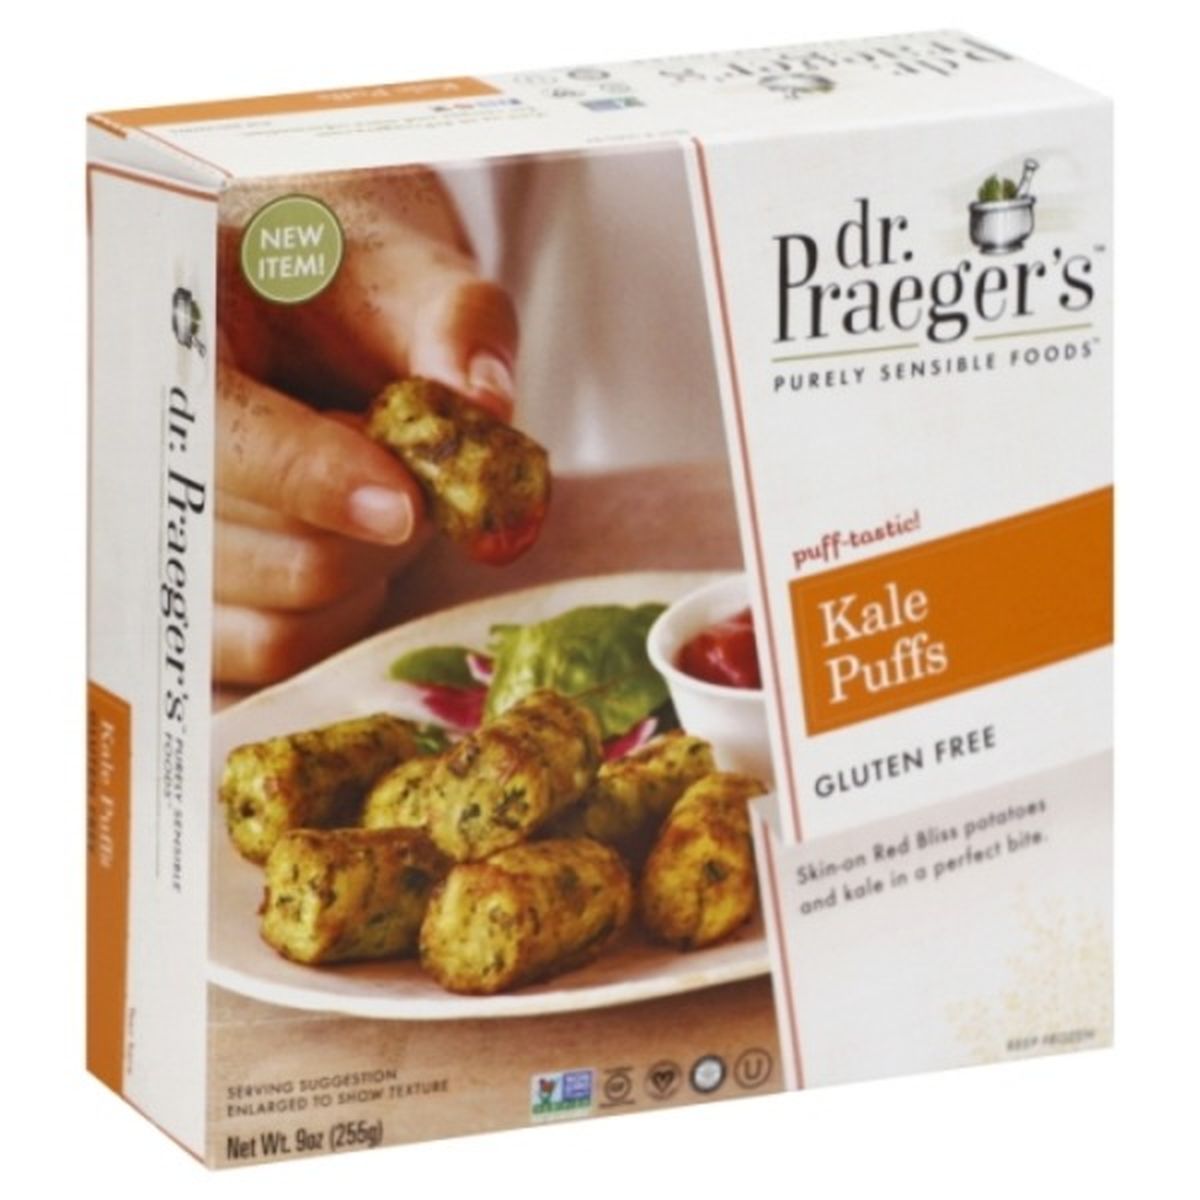 Calories in Dr. Praeger's Kale Puffs